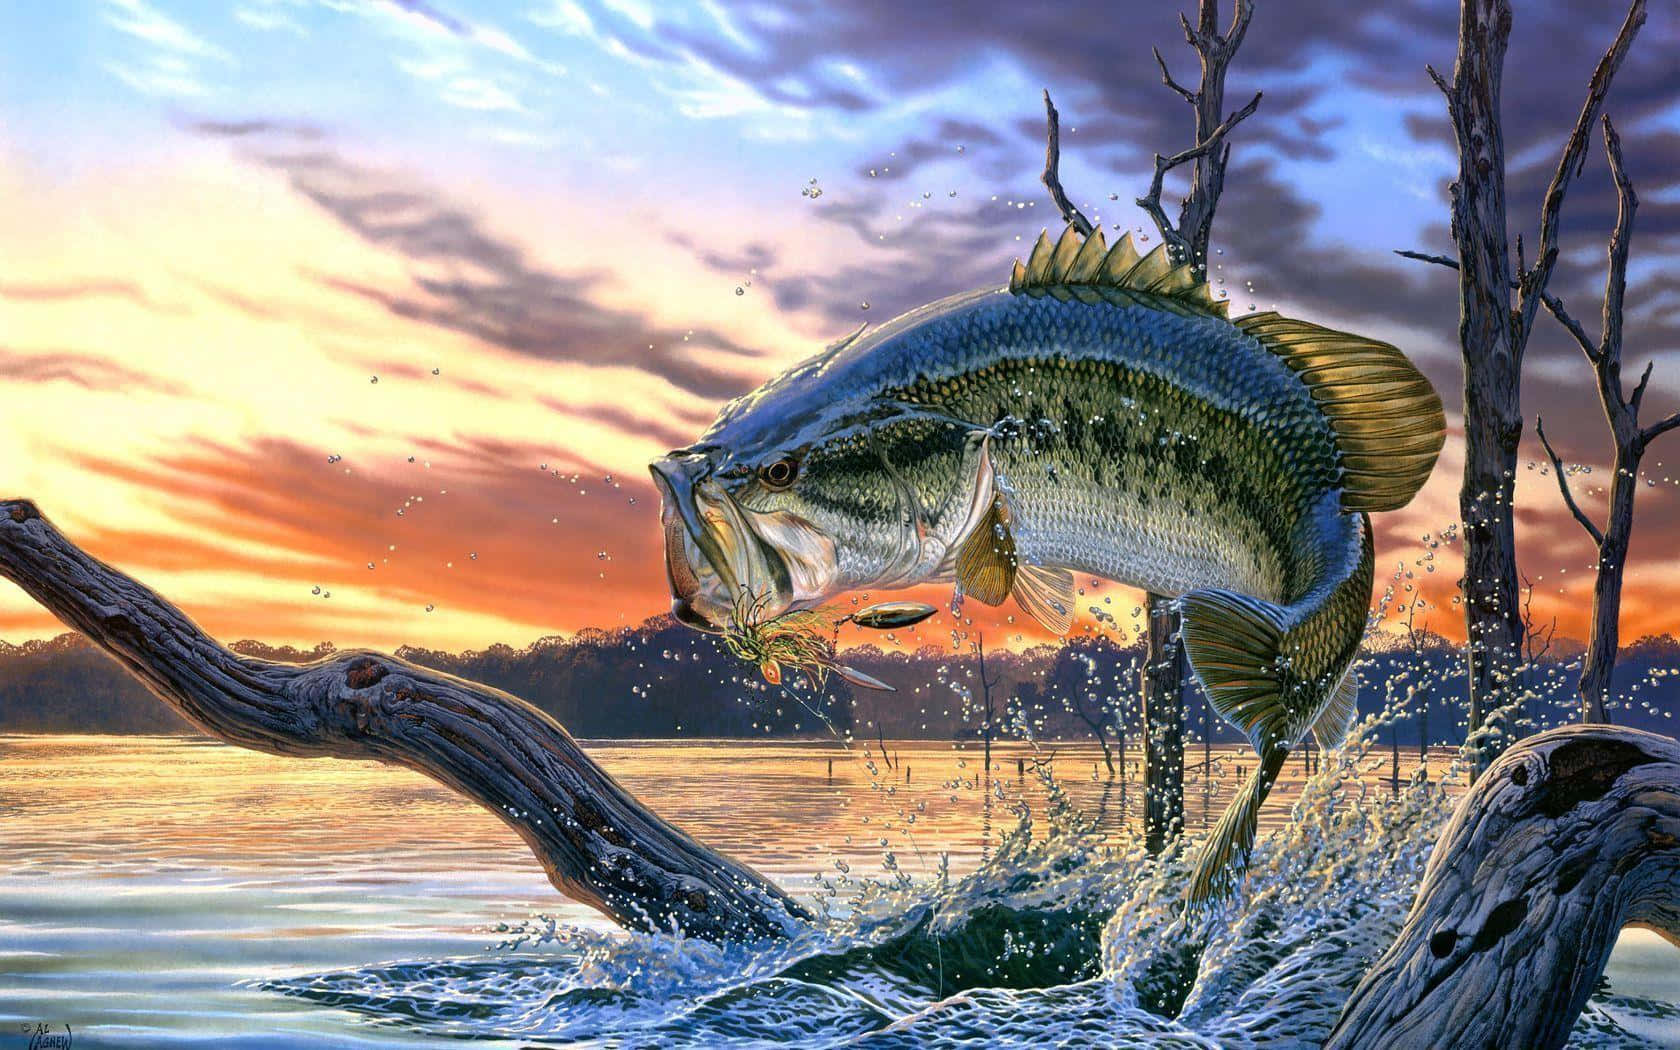 Fiskerbilleder med pastelfarver pynte baggrunden.